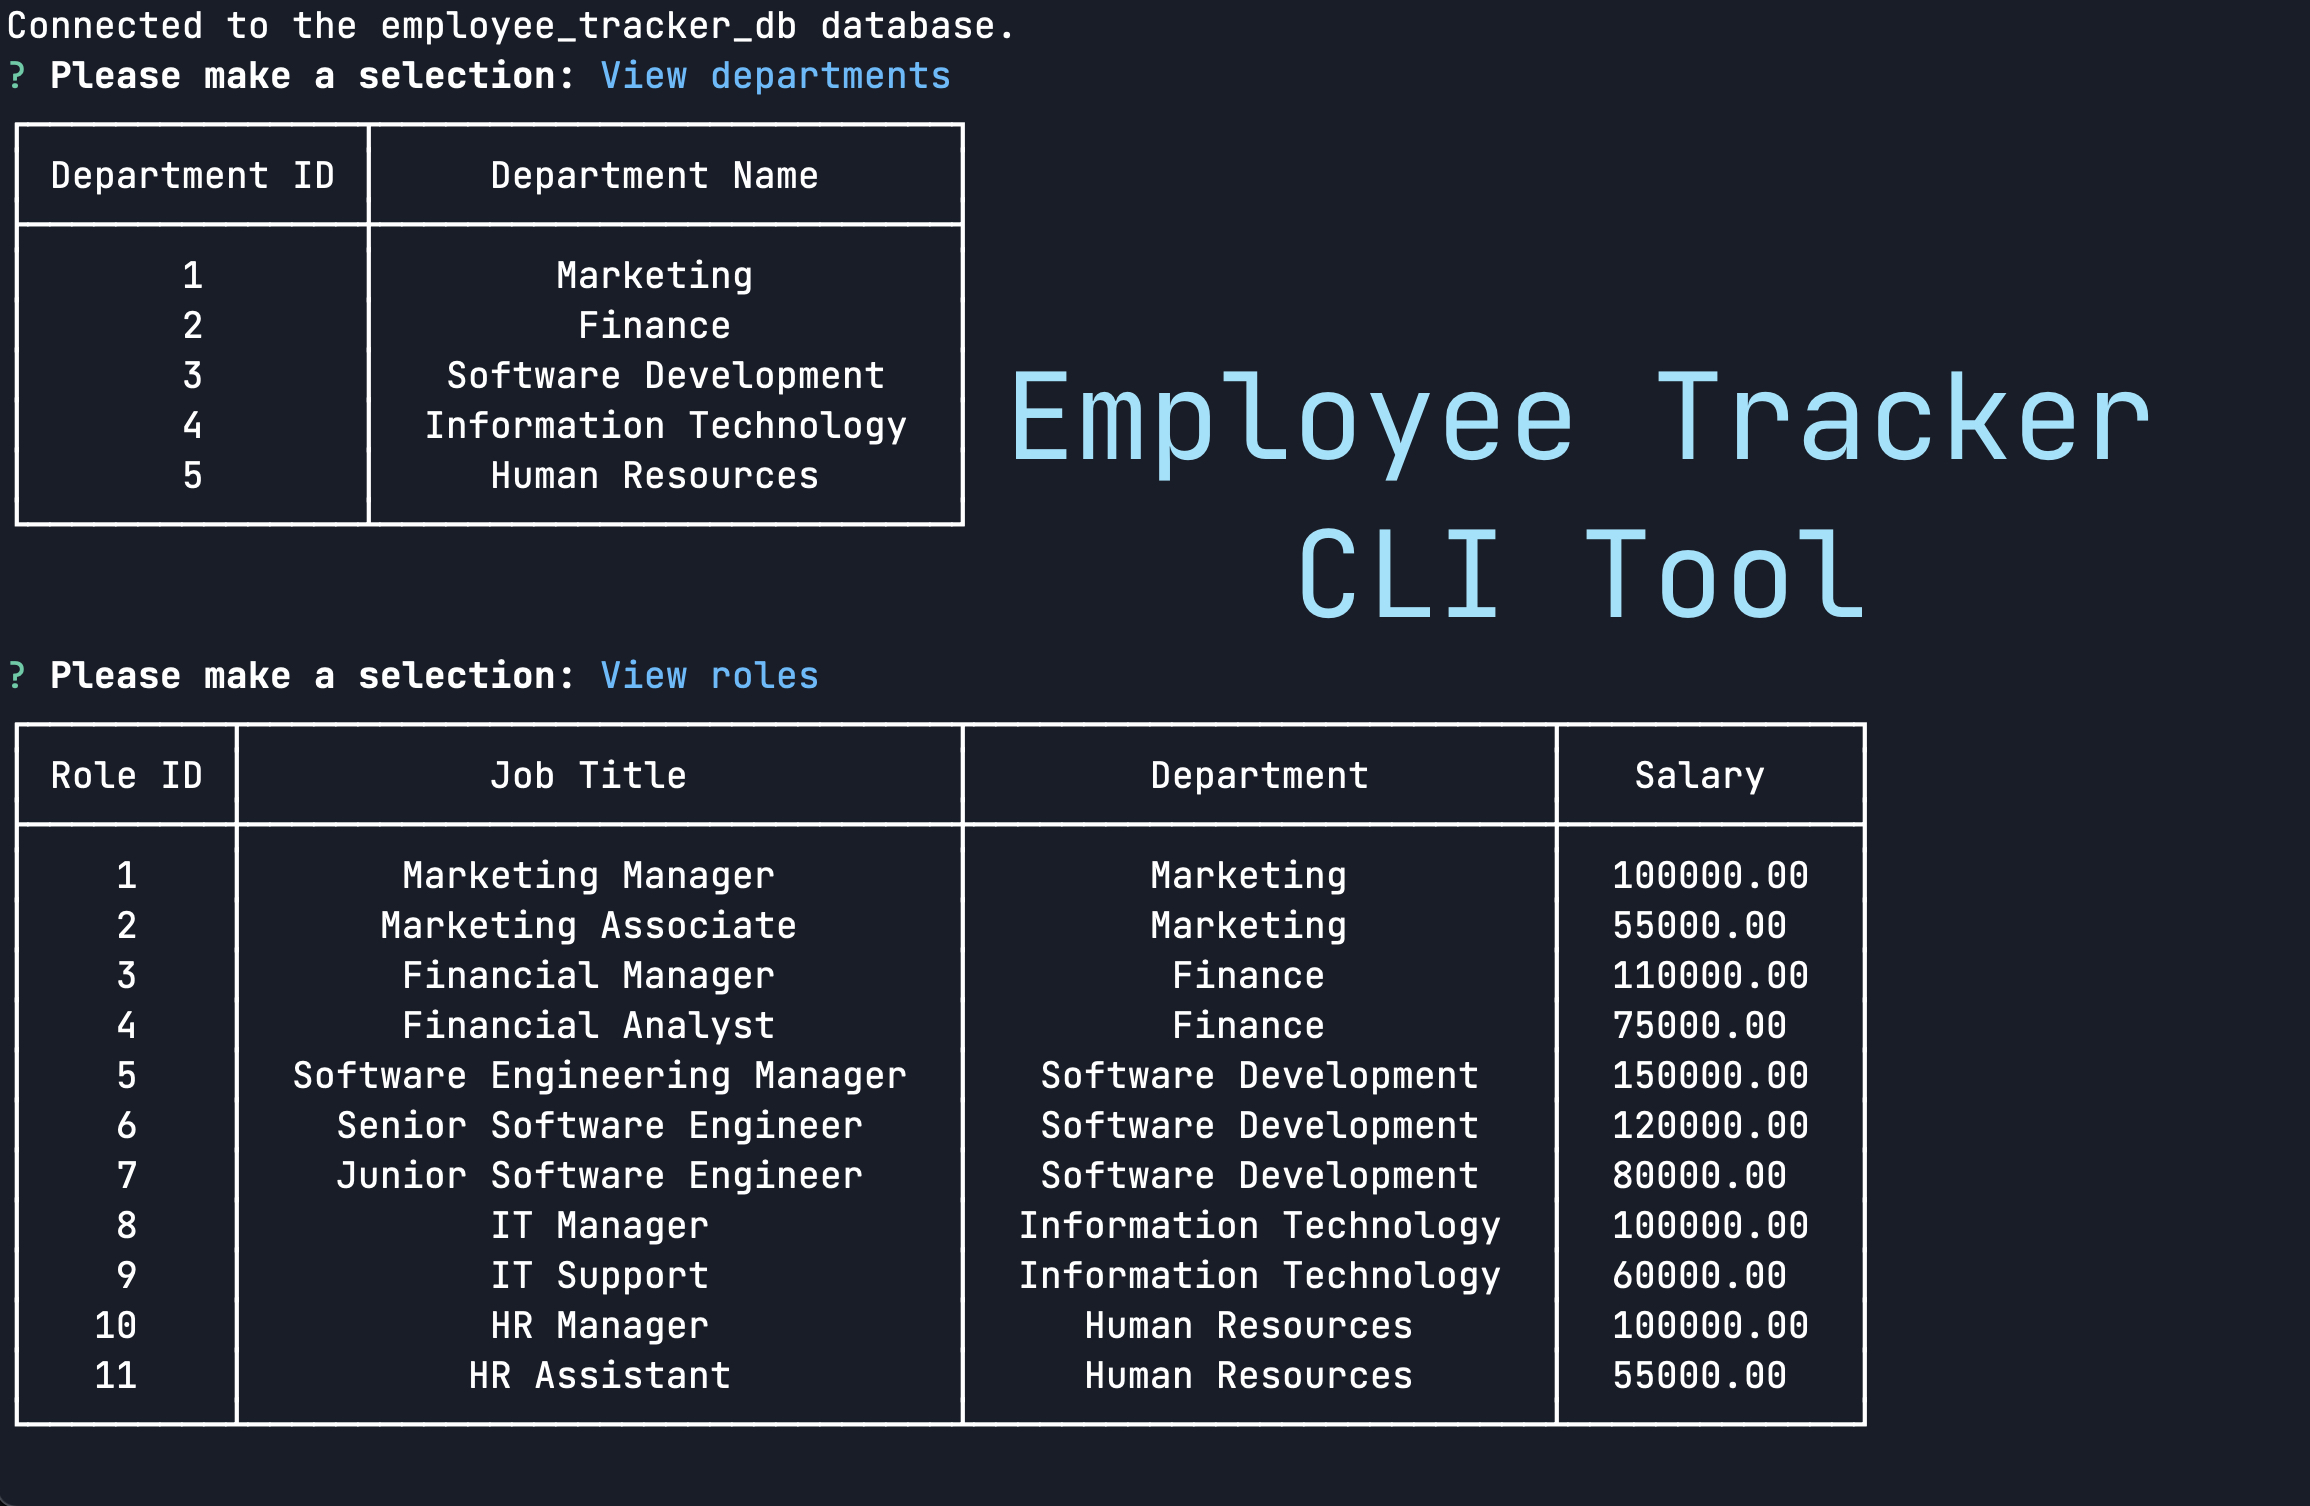 Employee Tracker CLI tool terminal window